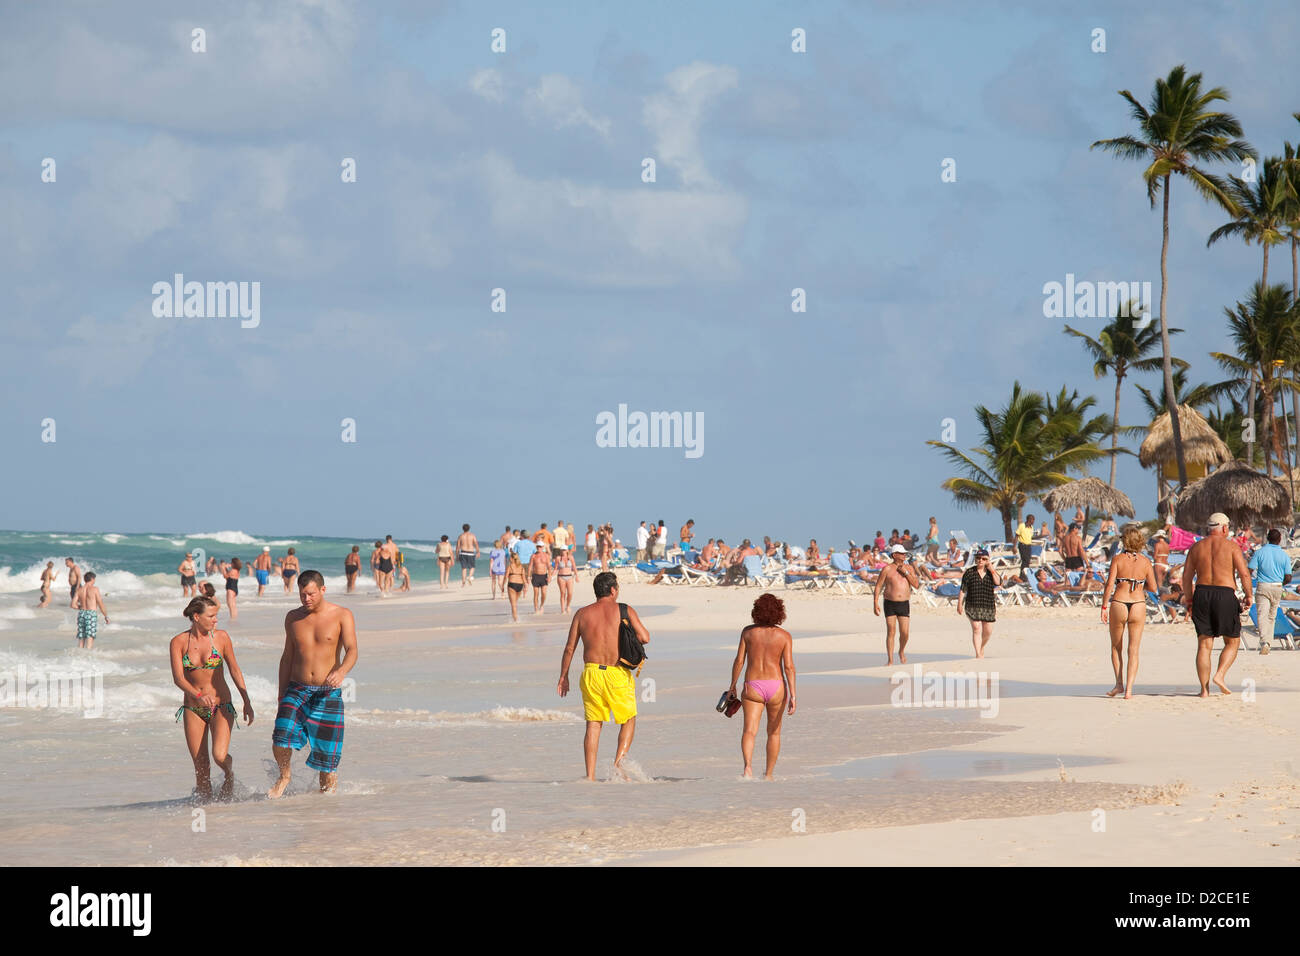 america, caribbean sea, hispaniola island, dominican republic, punta cana, hotel barcelo punta cana, beach Stock Photo